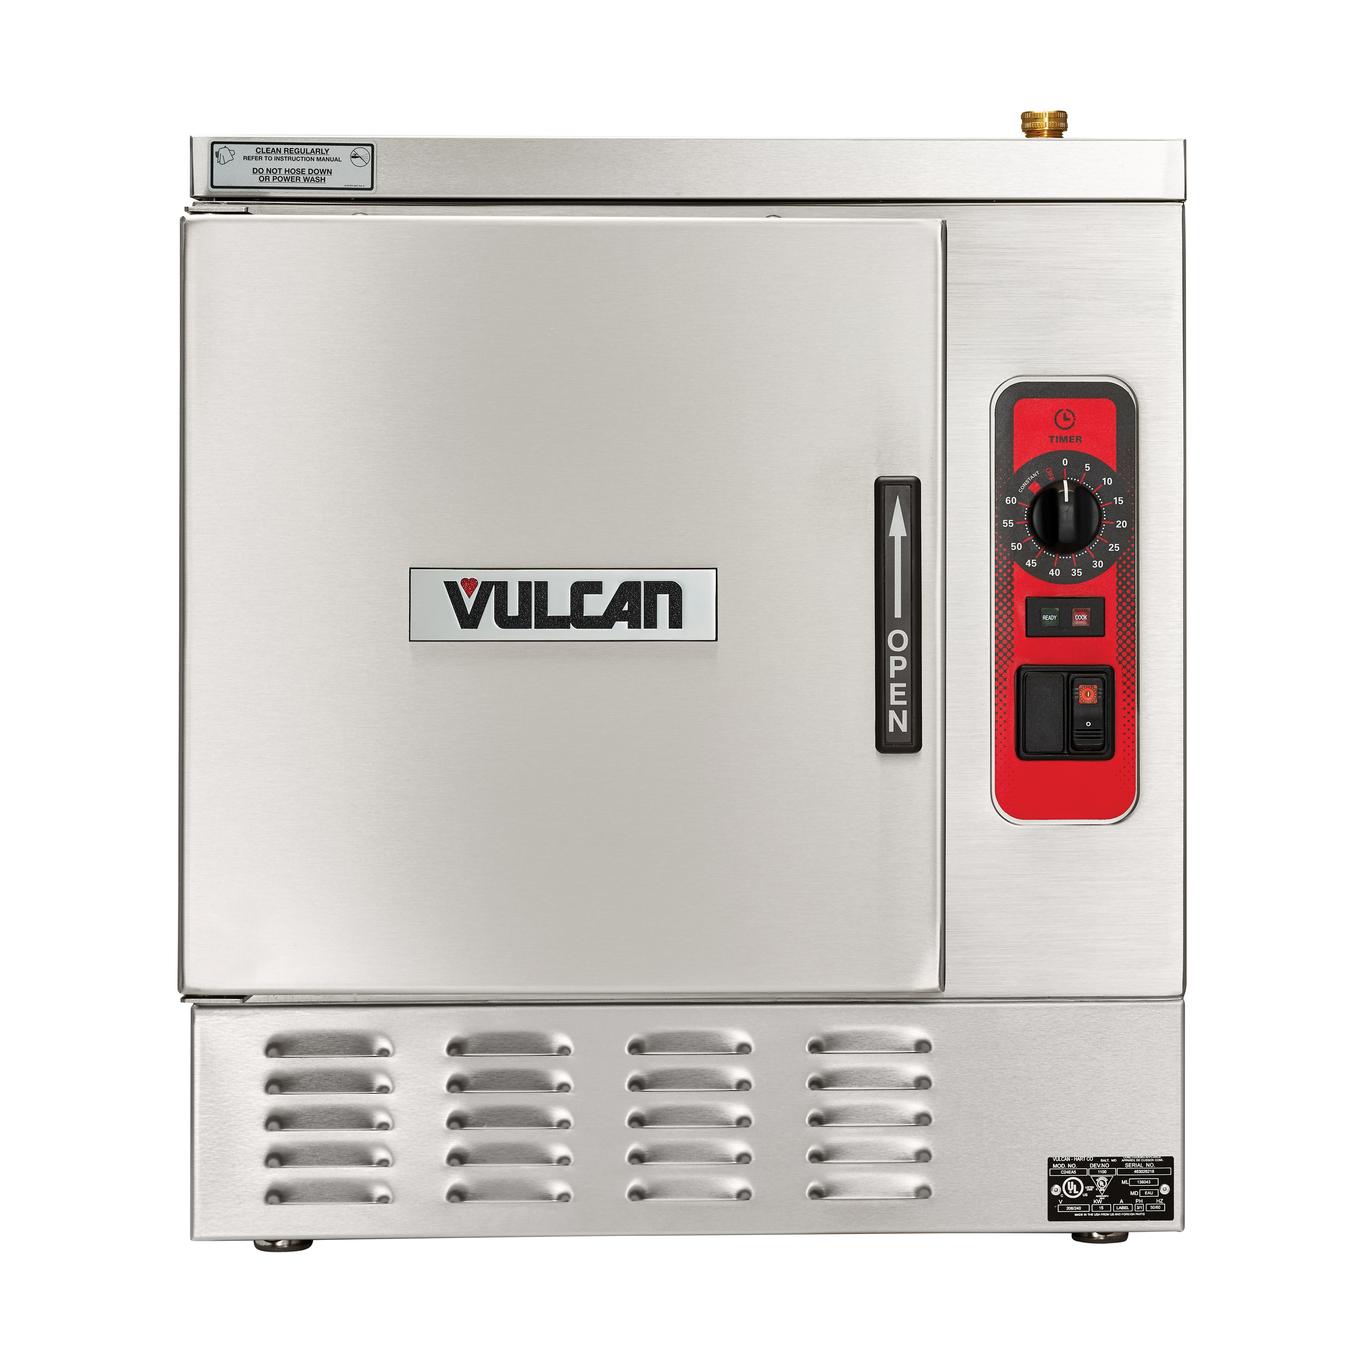 Vulcan C24EA3-PLUS - Item 200090